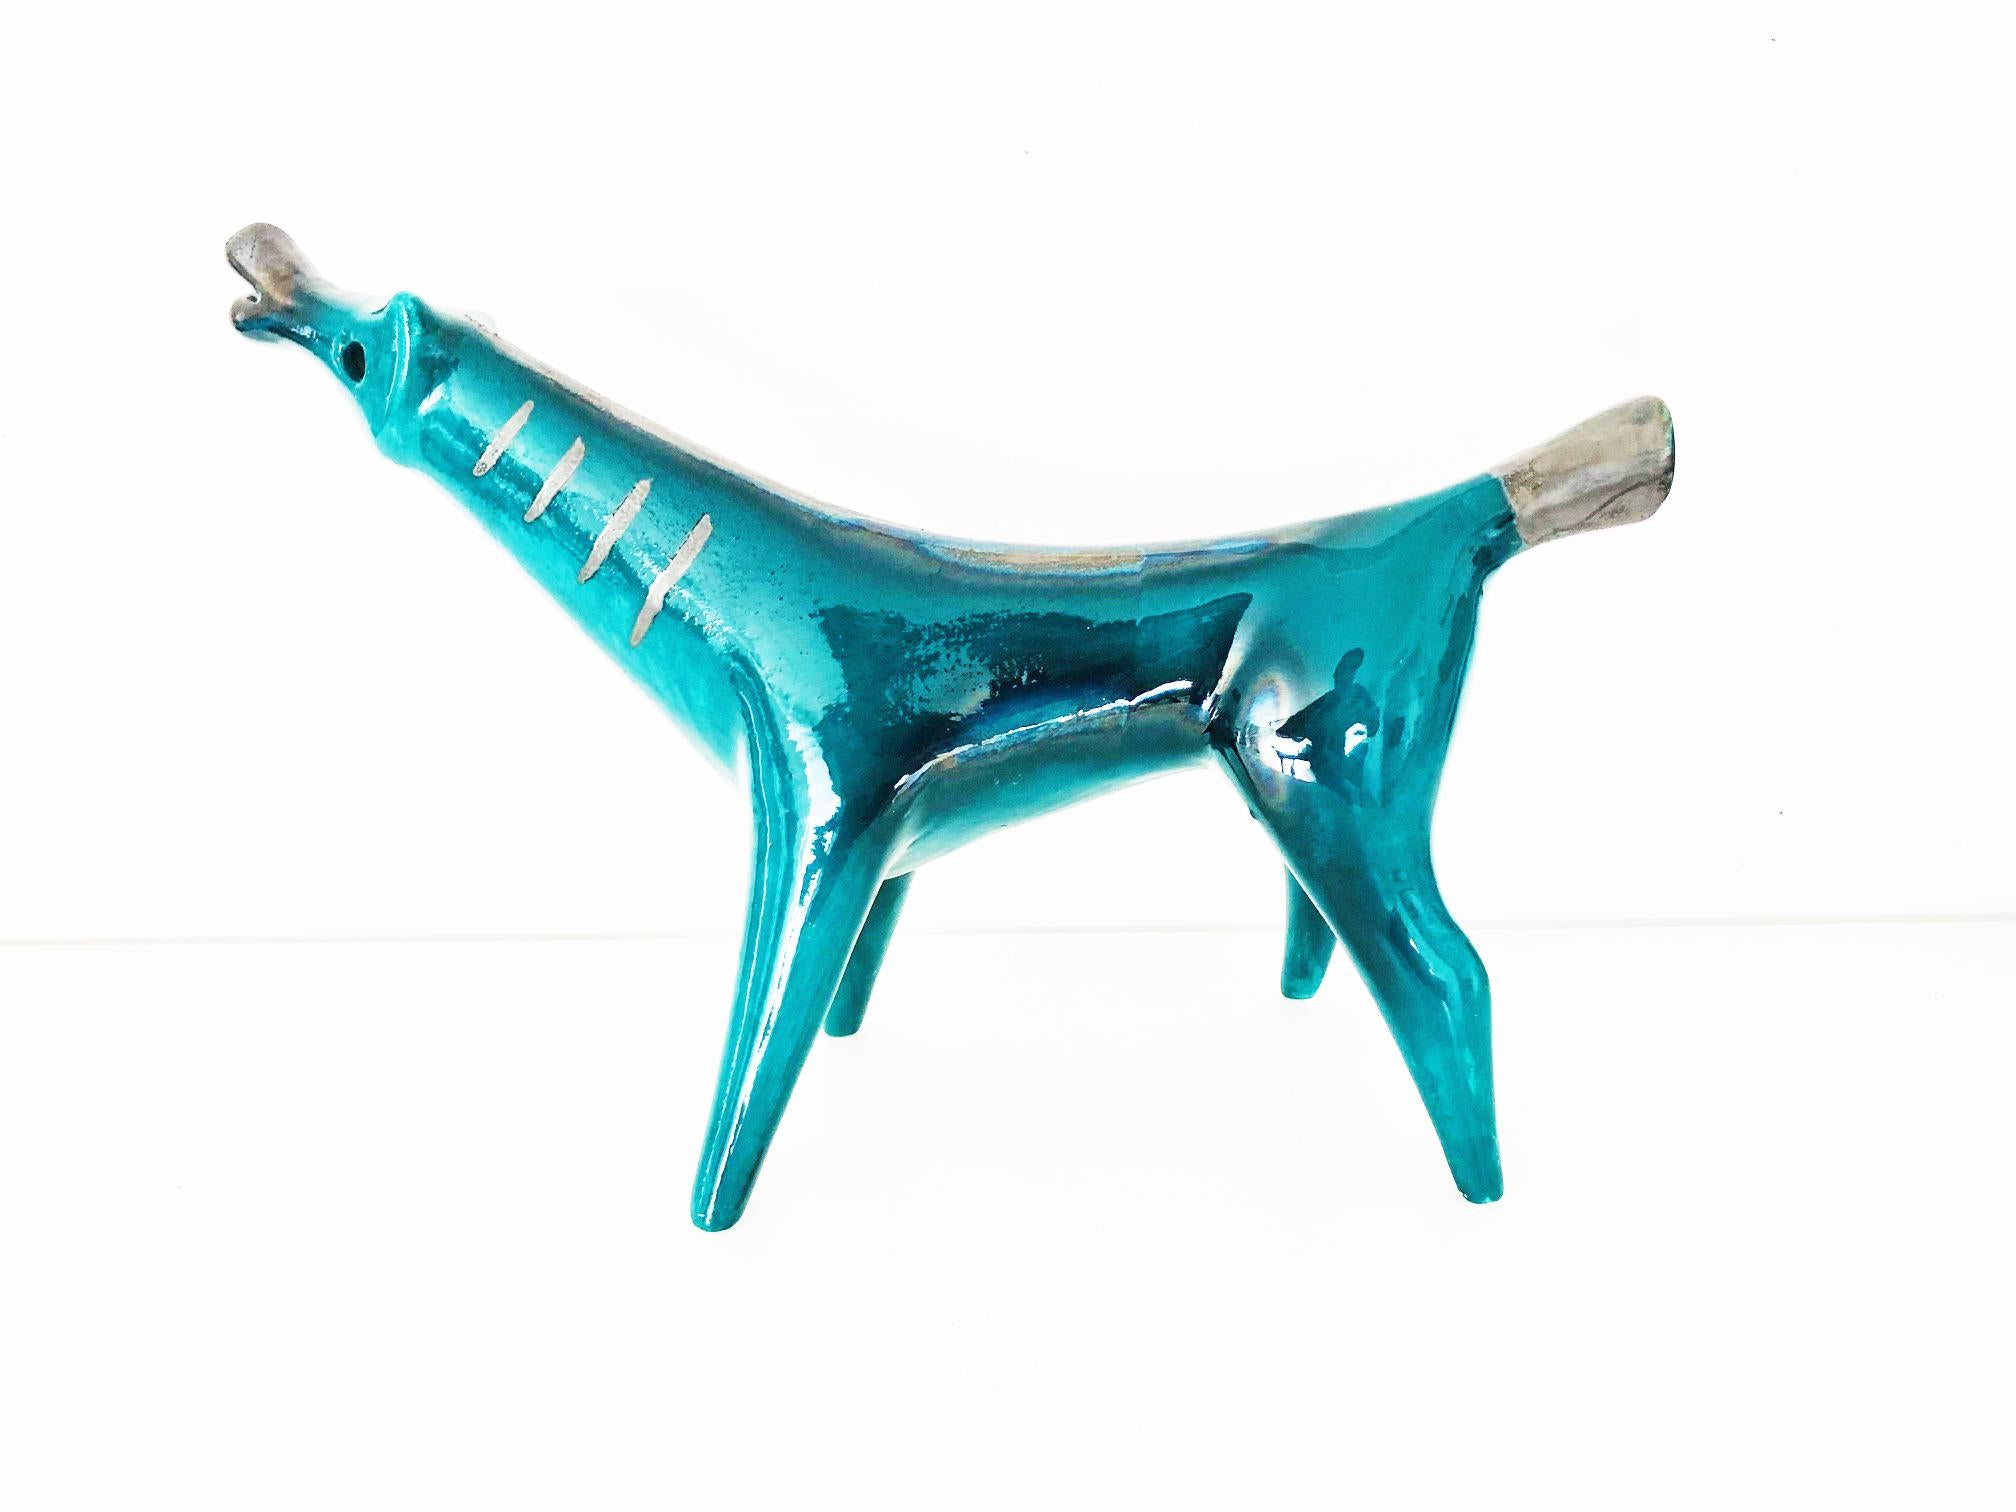 Bauhaus Blue Dog of Roberto Rigon 1950s Made in Italy, Art